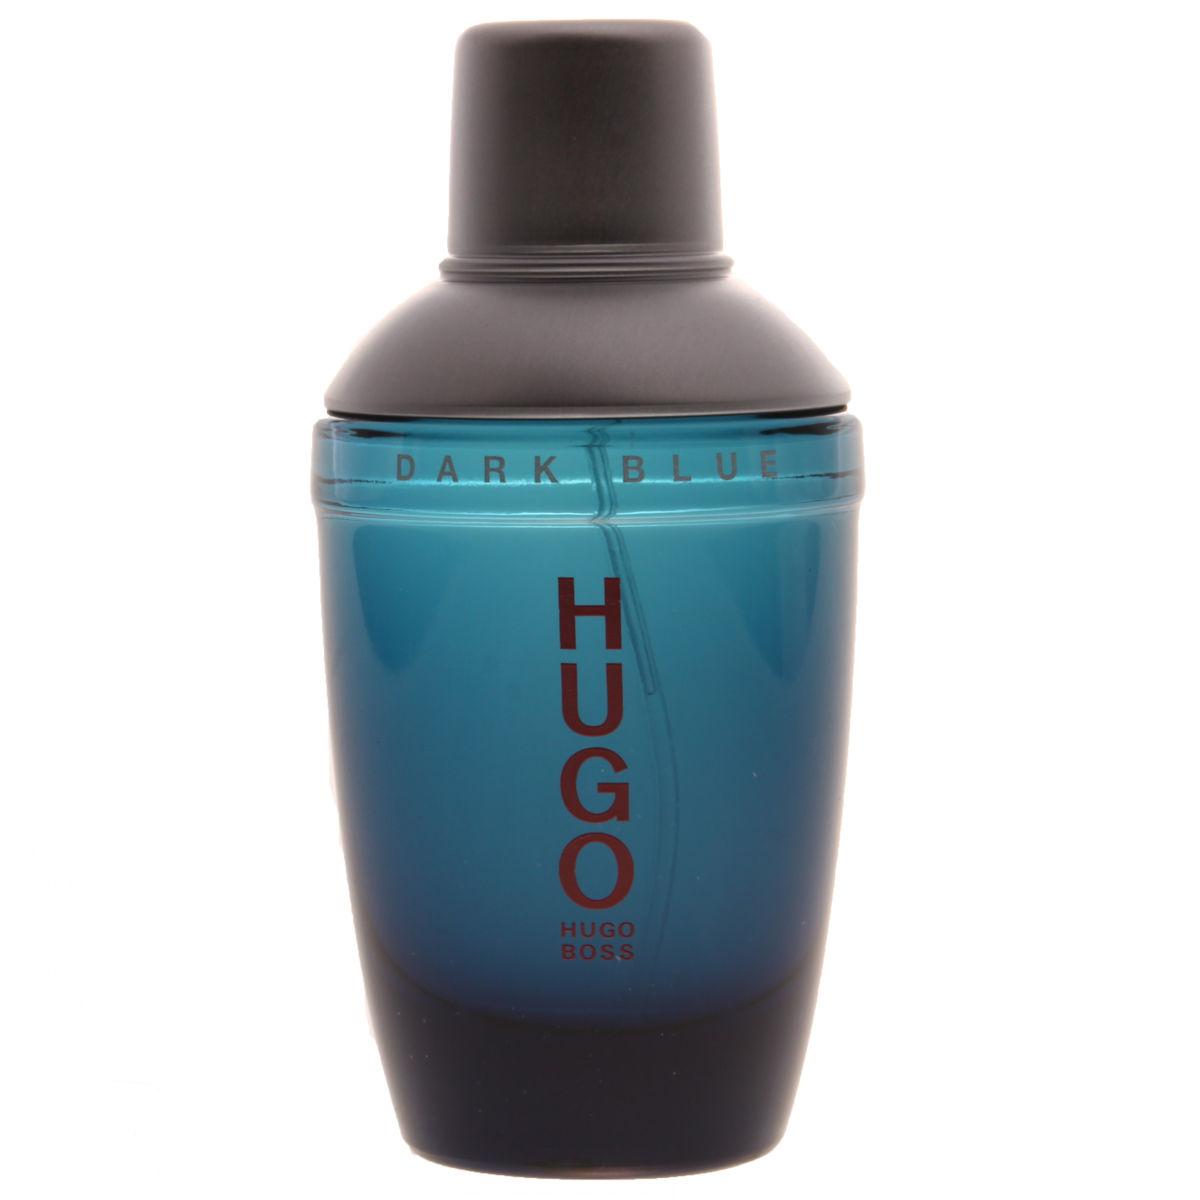 hugo boss dark blue 125ml price